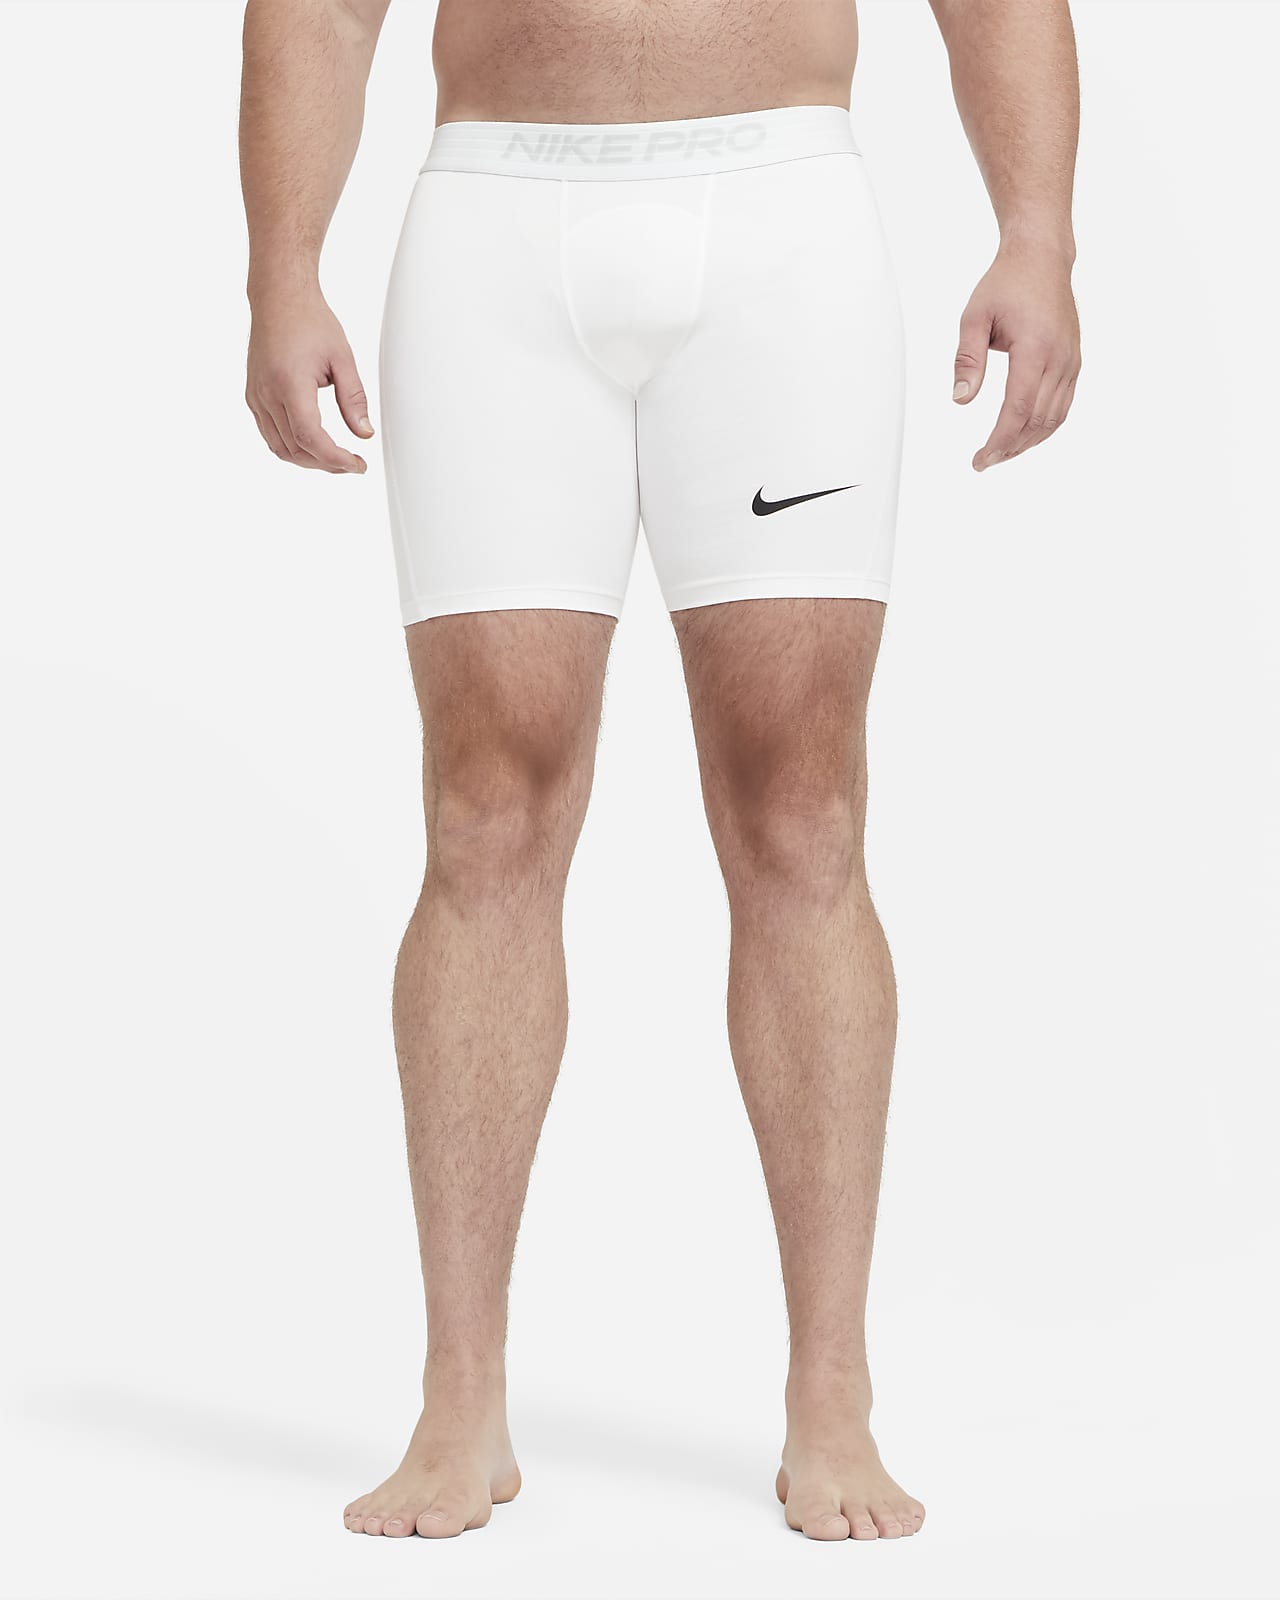 nike long shorts for men